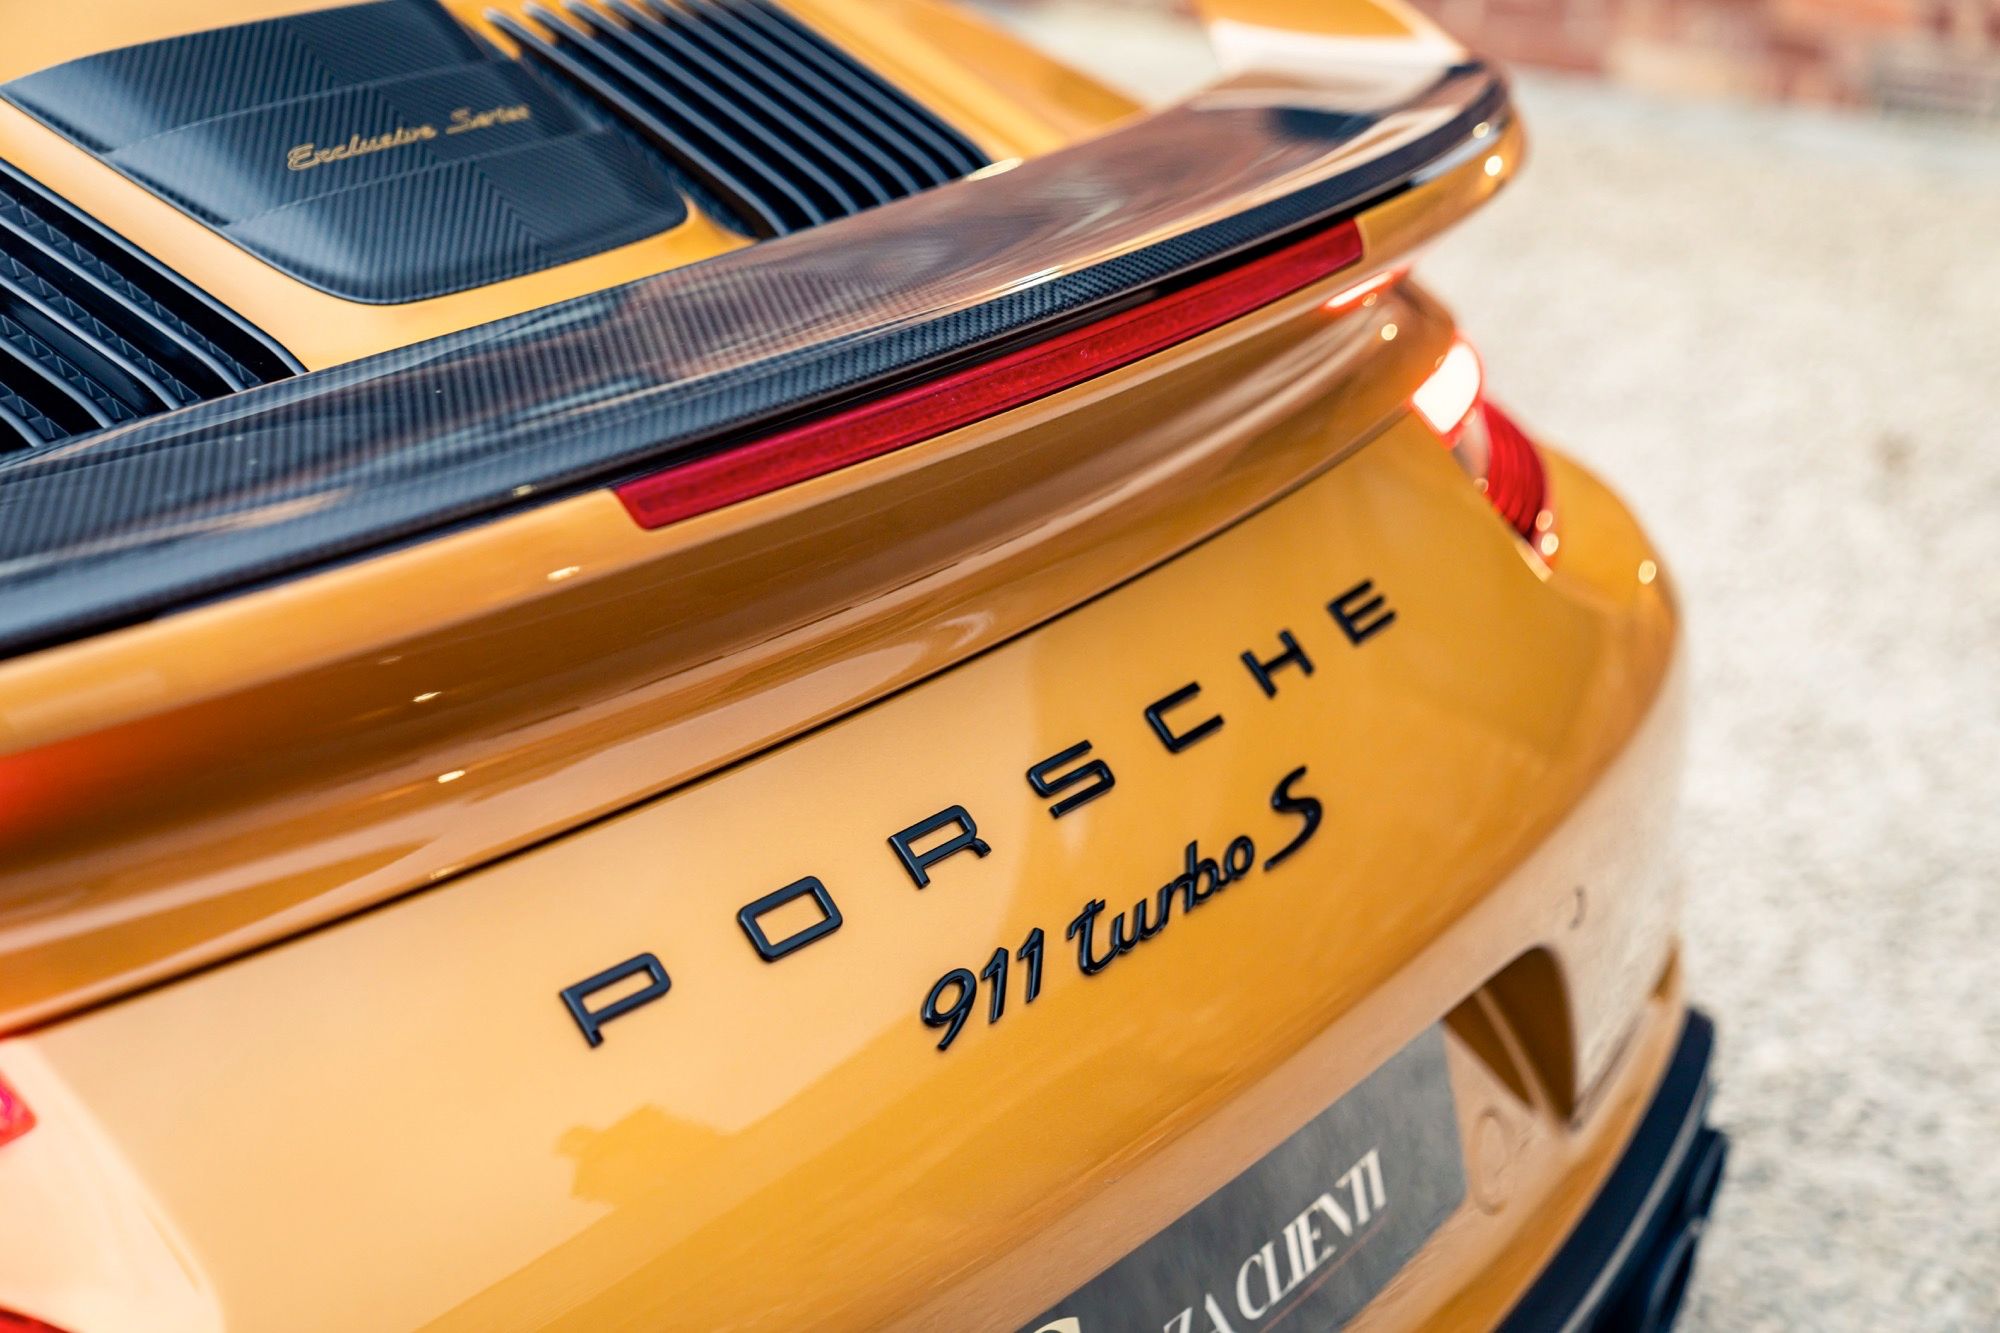 2018 Porsche 911 Turbo S "Exclusive Series"  037/500 for sale